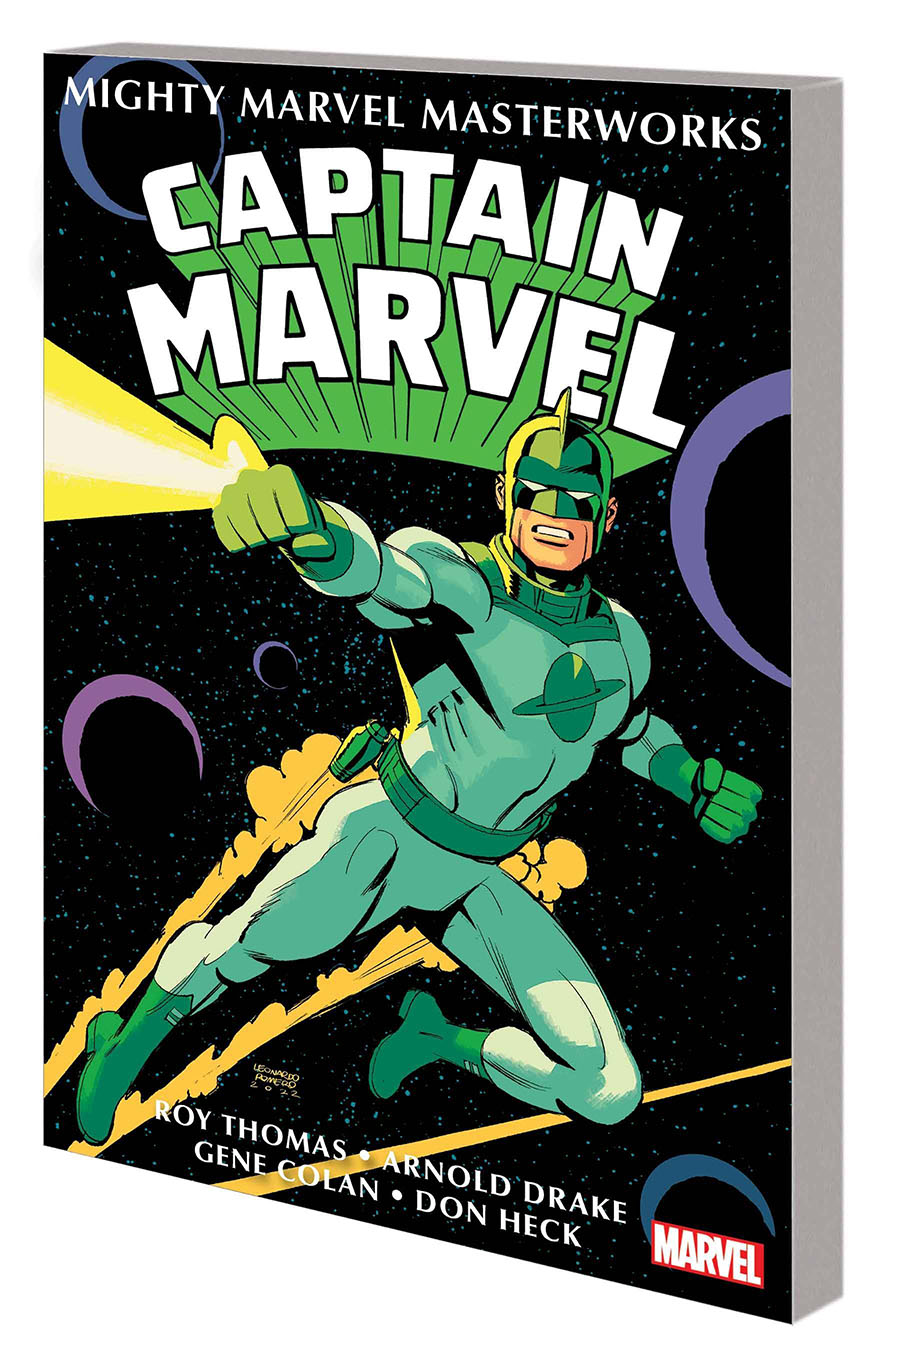 Mighty Marvel Masterworks Captain Marvel Vol 1 Coming Of Captain Marvel TP Book Market Leonardo Romero Cover